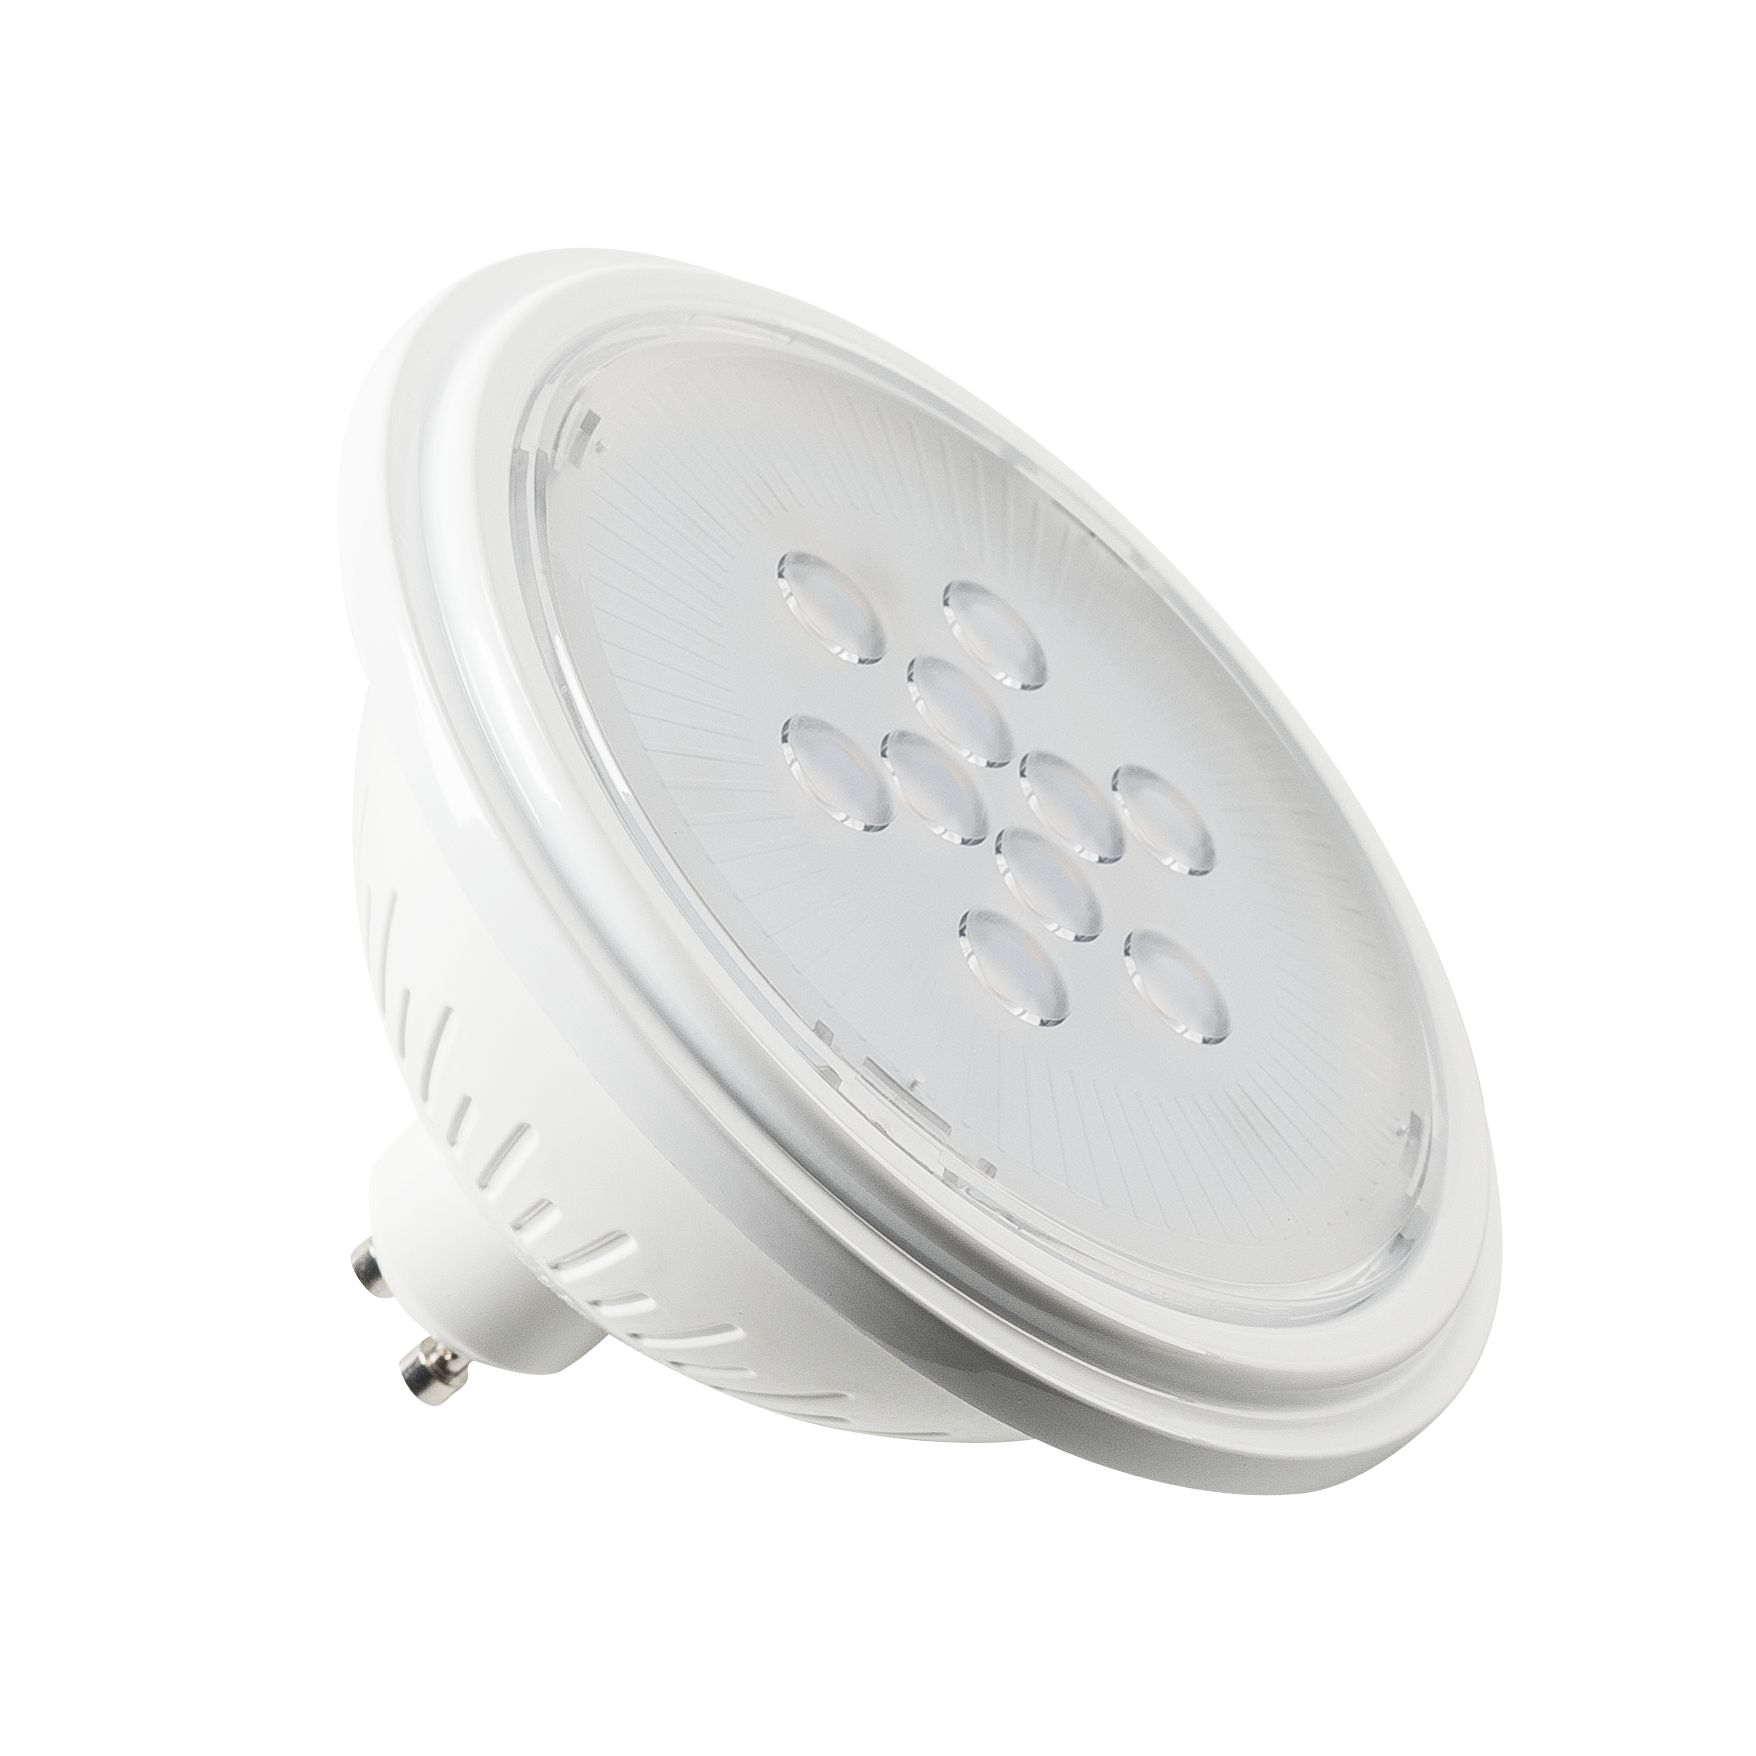 LED lamp, QPAR111, GU10, 7W, 3000K 40°, white